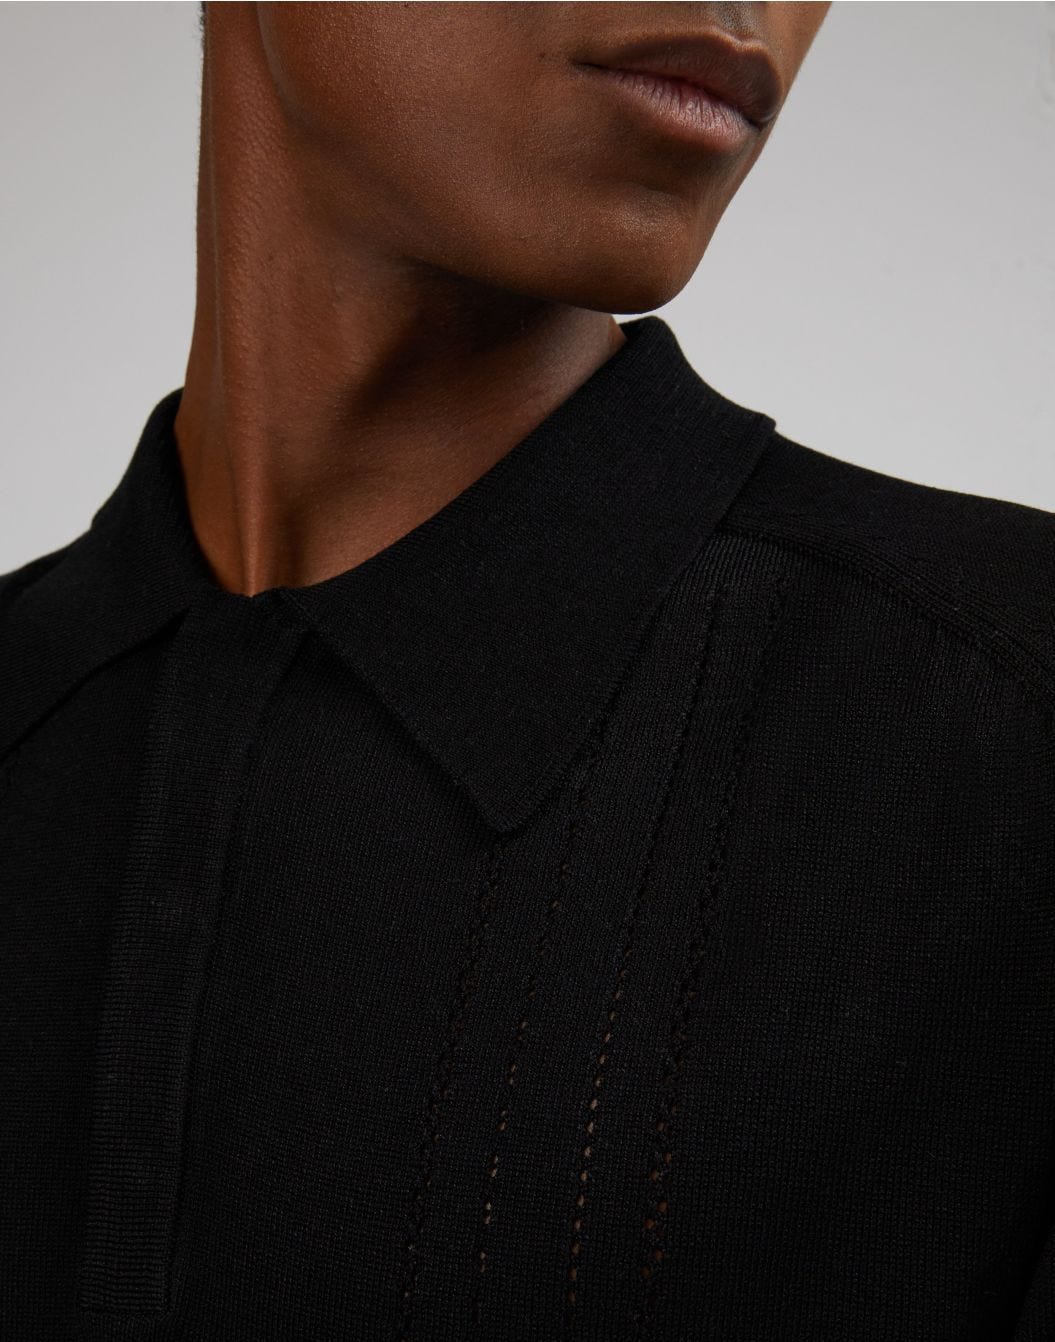 Black long-sleeved polo shirt